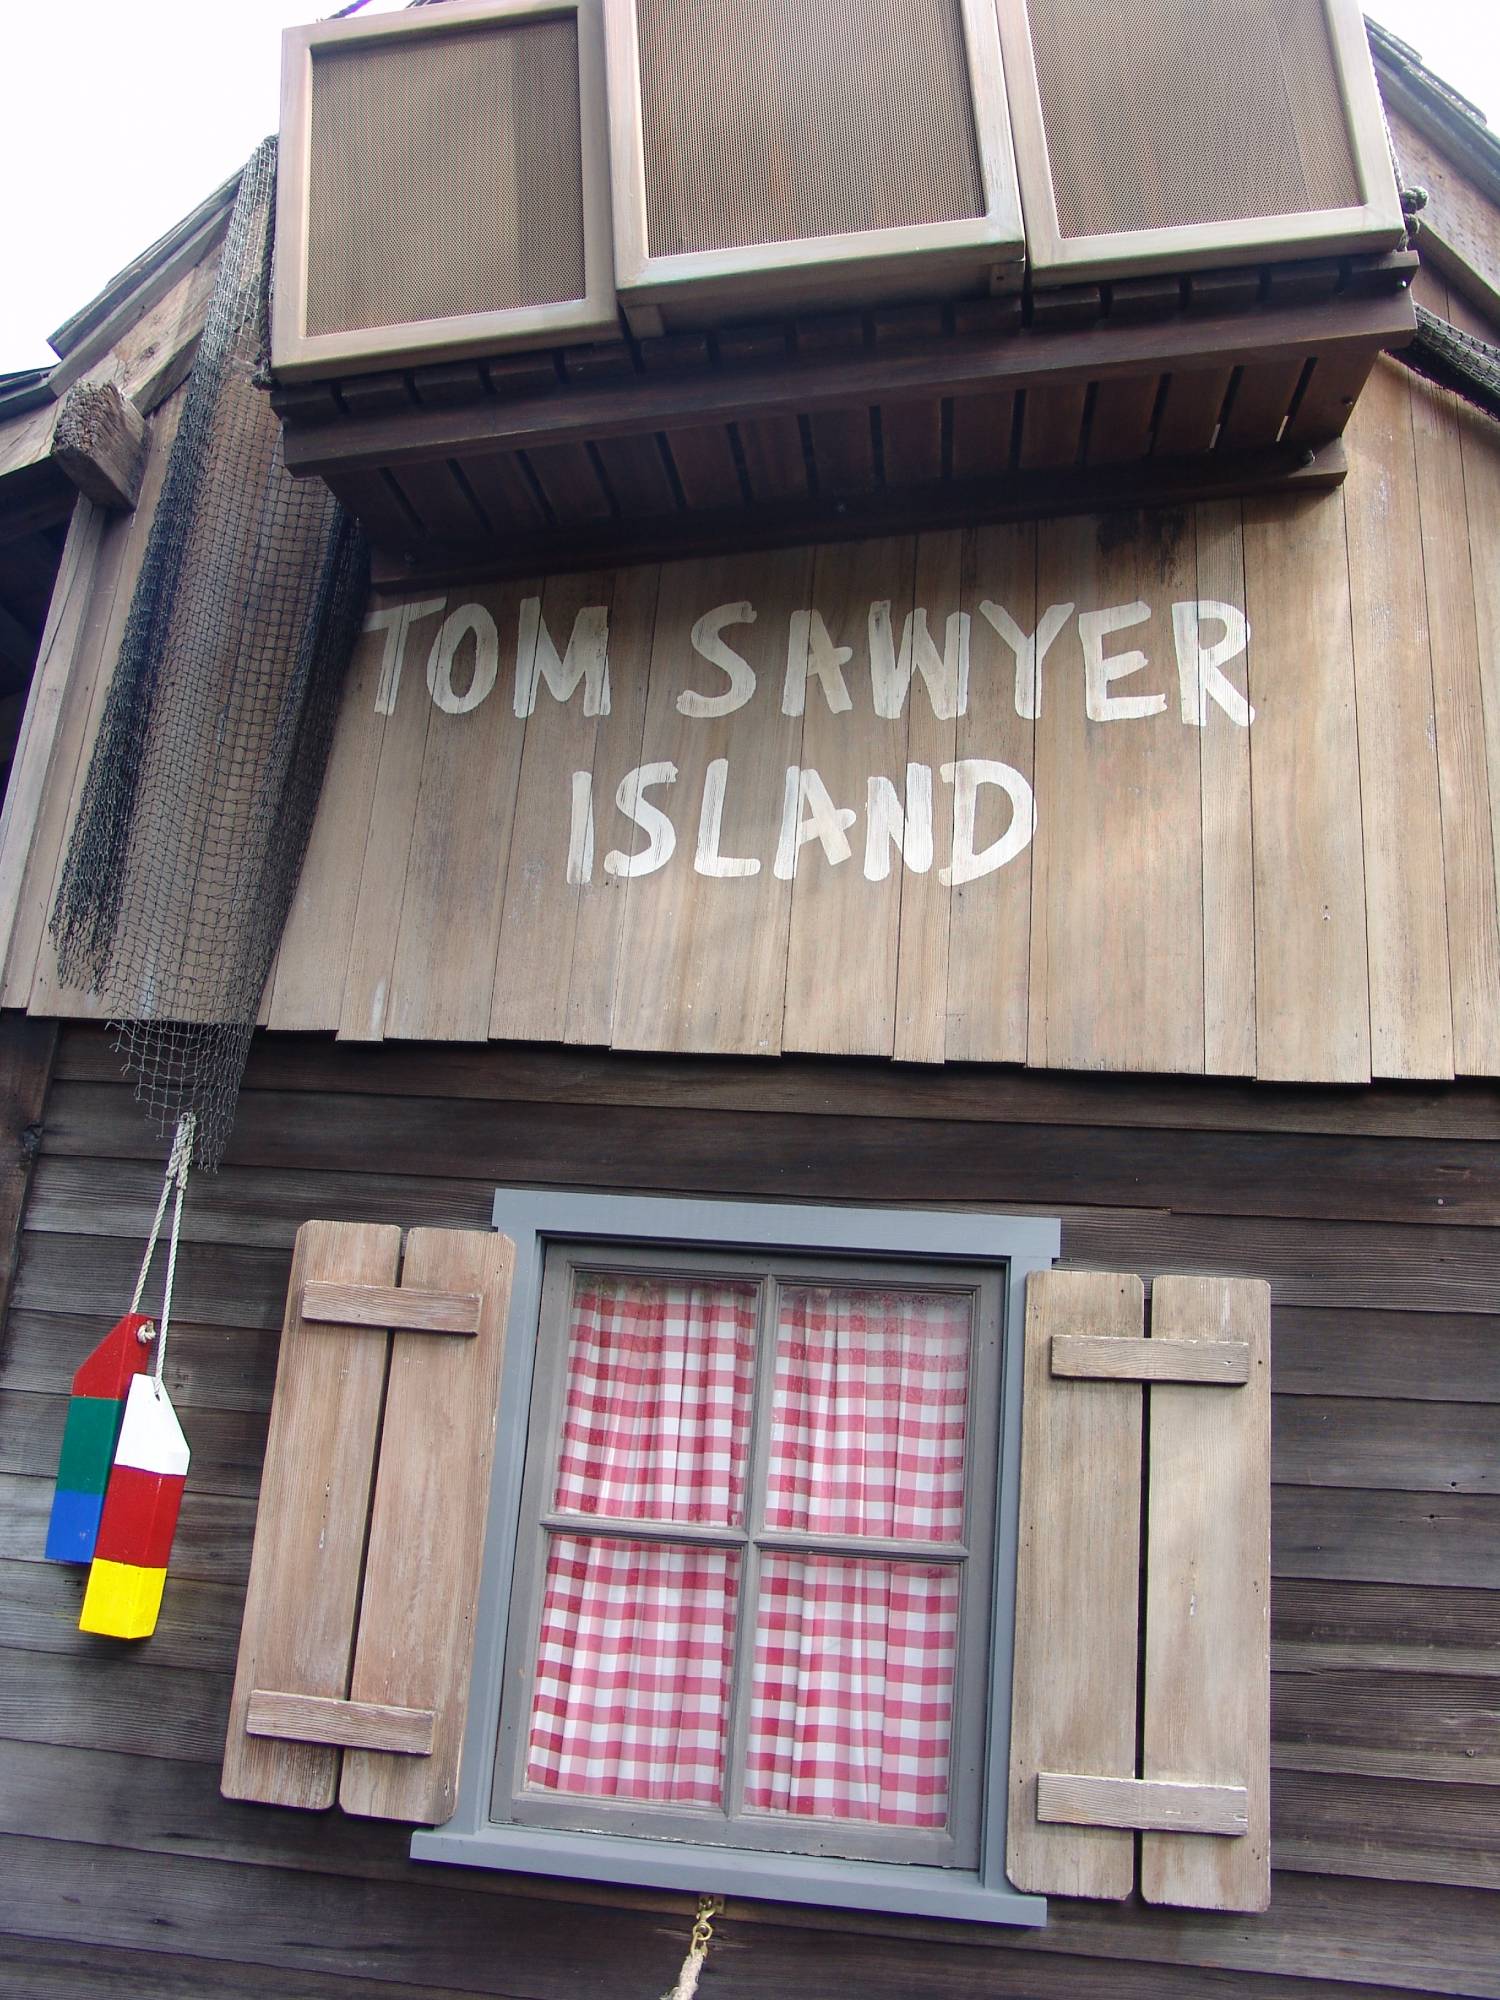 Magic Kingdom - Tom Sawyer Island sign